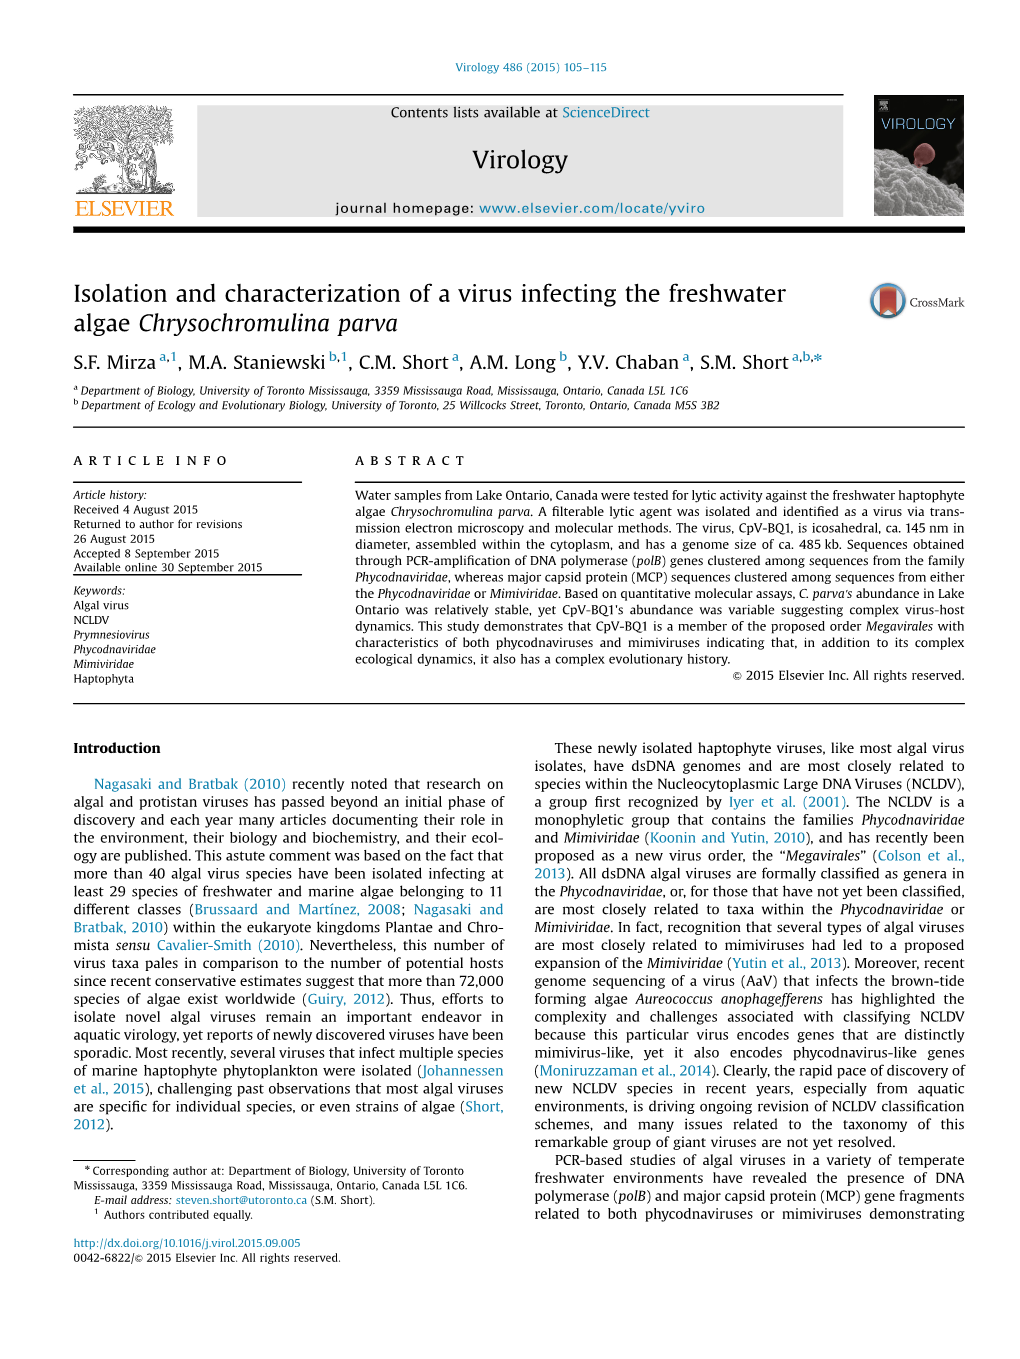 Isolation and Characterization of a Virus Infecting the Freshwater Algae Chrysochromulina Parva